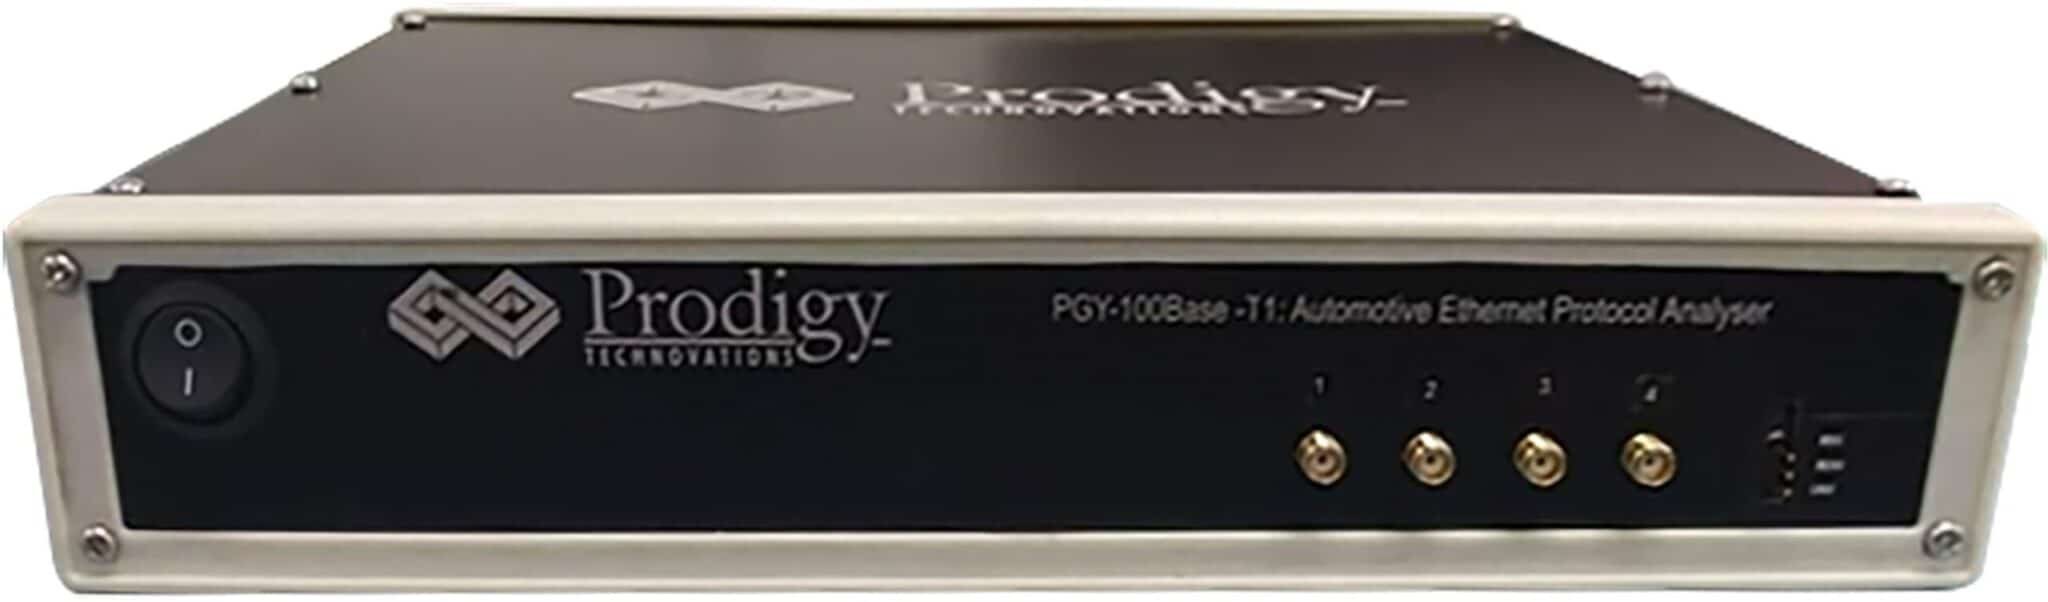 Prodigy 100BASE-T1汽车以太网协议分析仪